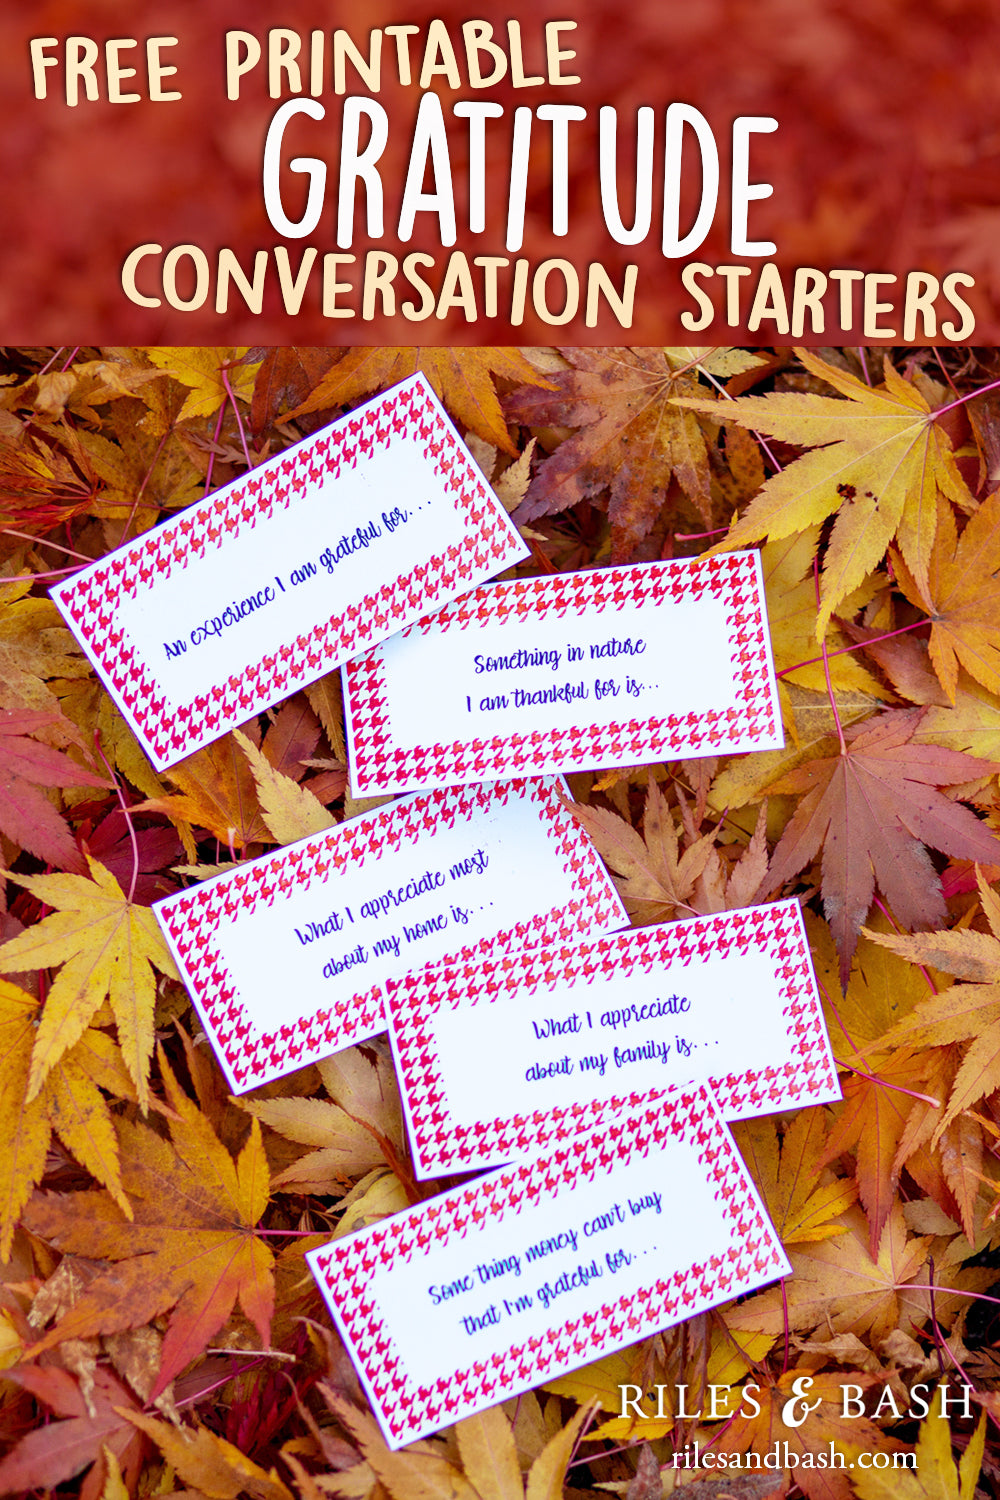 Riles & Bash Free Printable Gratitude Conversation Starter Cards_Gratitude Activities_Thanksgiving_Free Printable